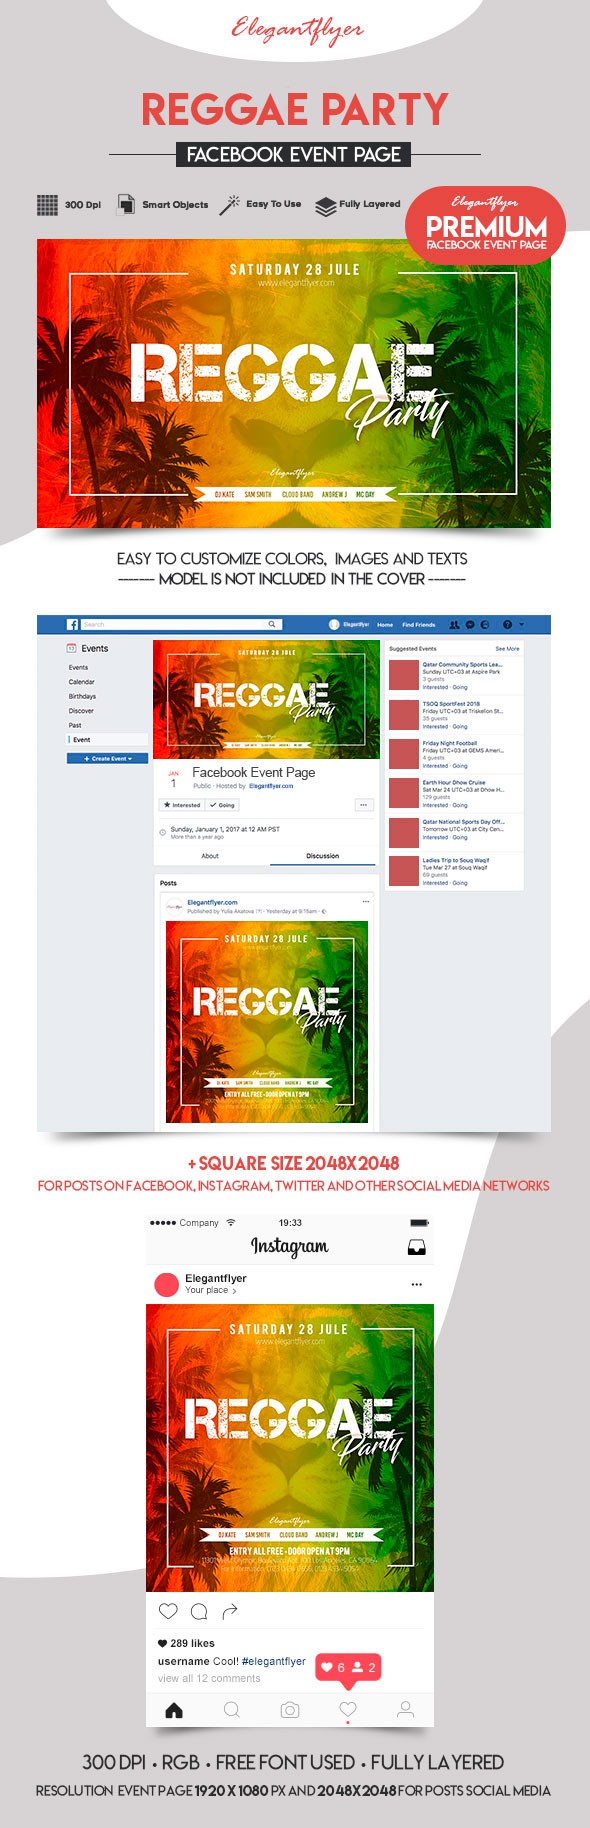 Impreza reggae na Facebooku by ElegantFlyer